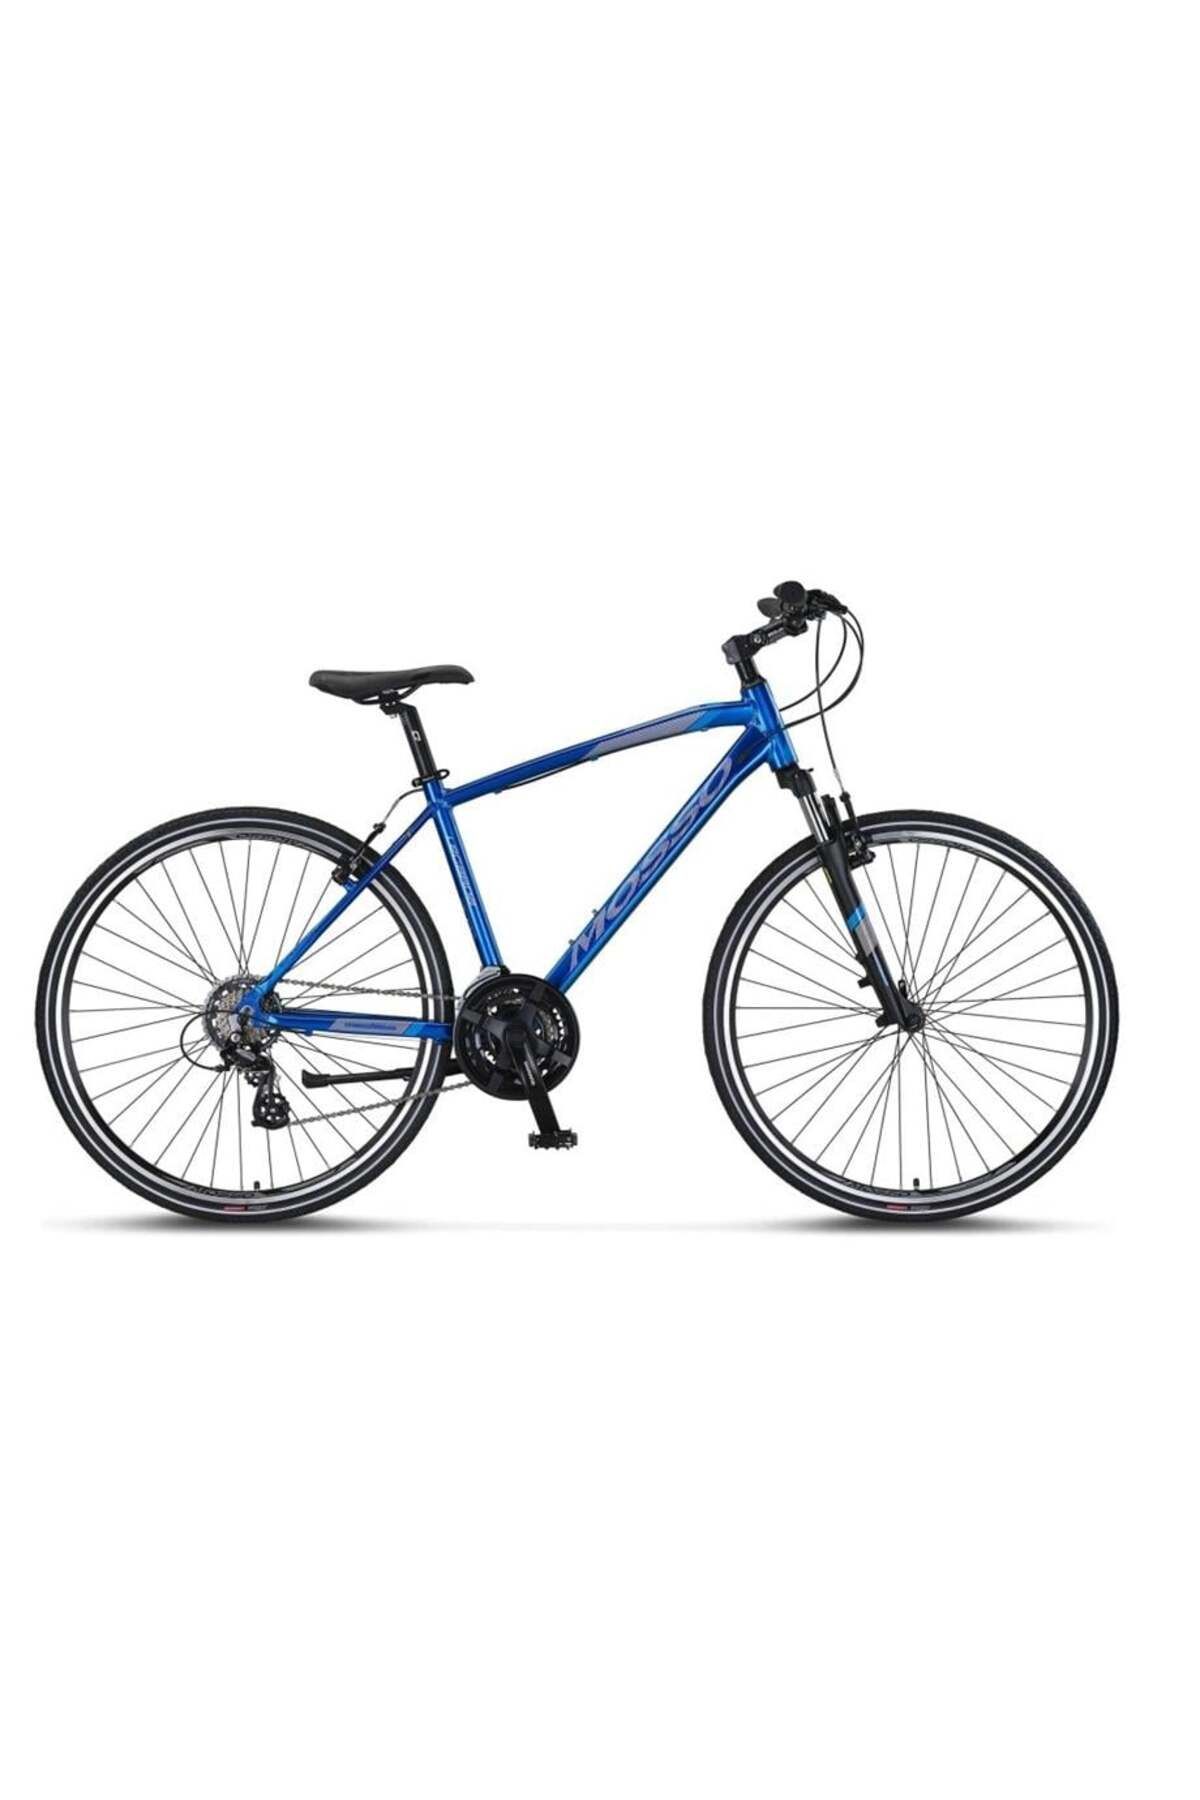 Mosso Legarda-2321-msm-v Erkek Şehir Bisikleti 410h V 28 Jant 21 Vites Lacivert Mavi